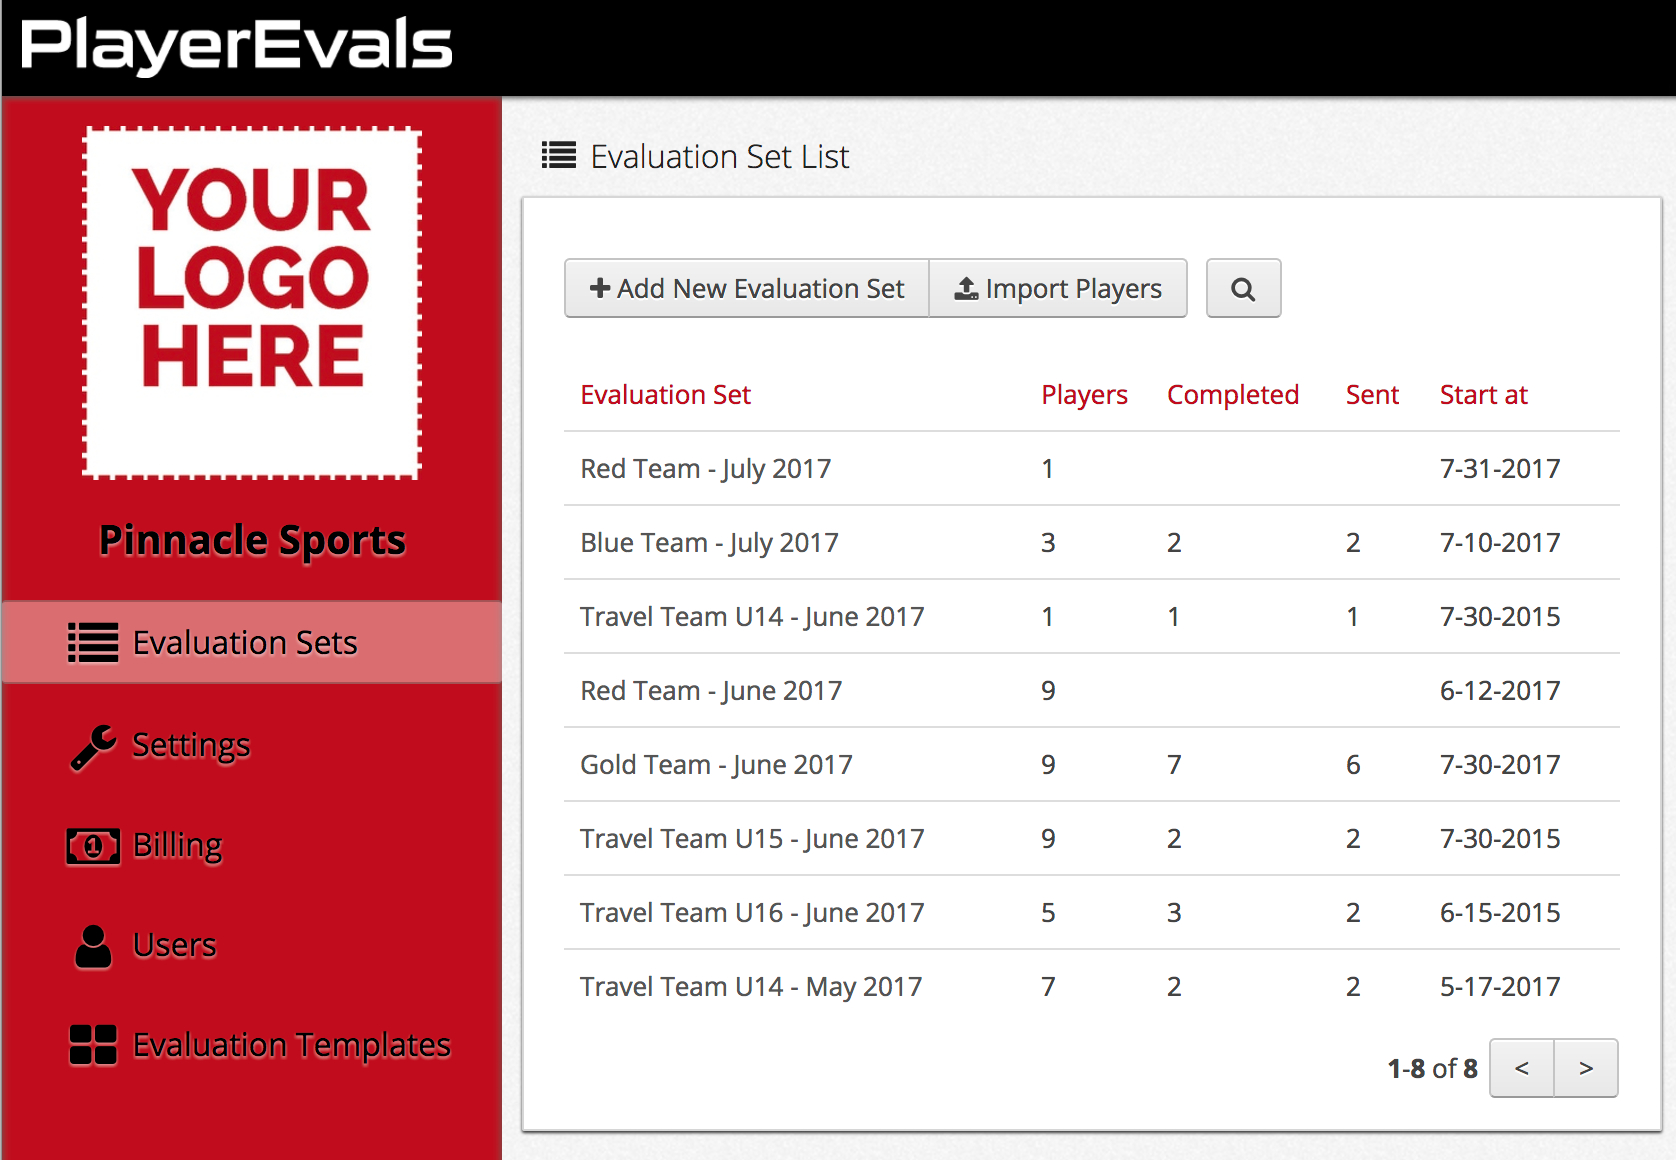 PlayerEvals: Evaluation Sets List Page